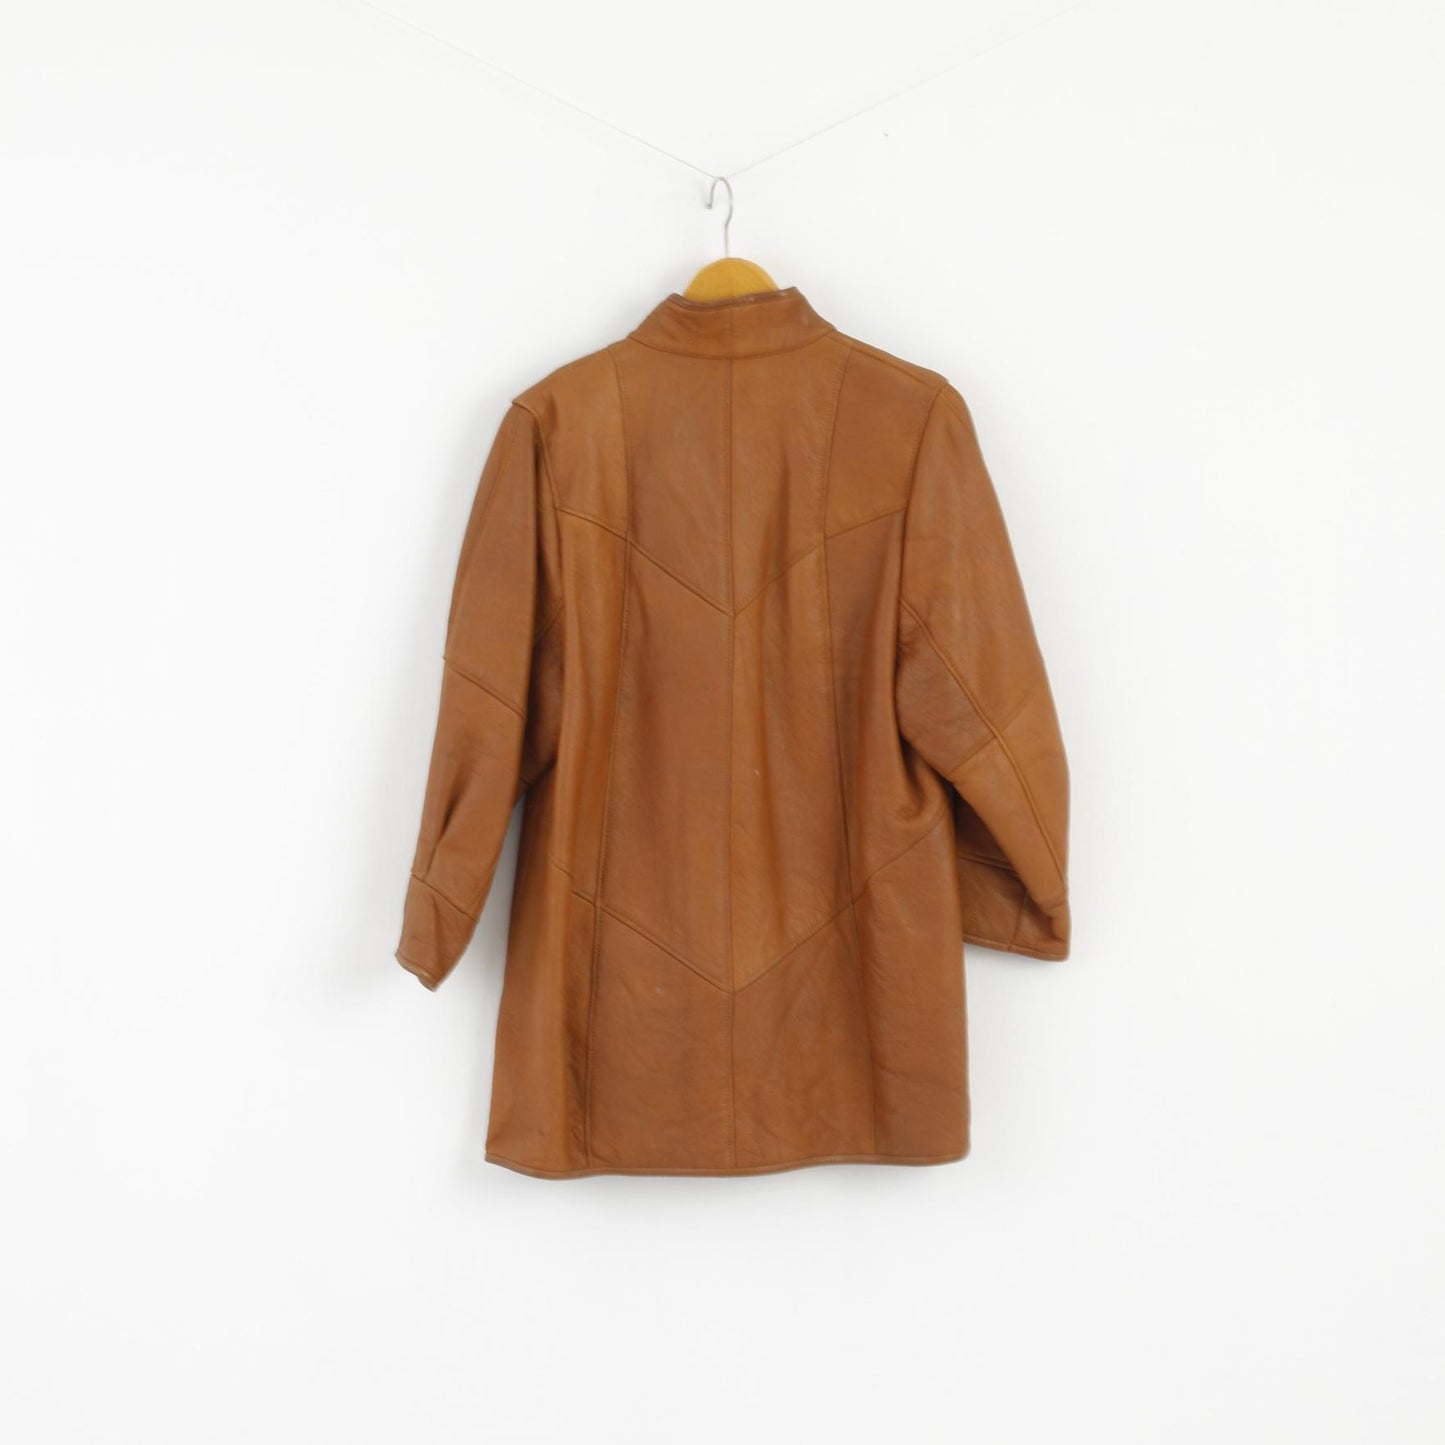 Frapelz Modell Women L Jacket Brown Leather Vintage 90s buttoned Long Top